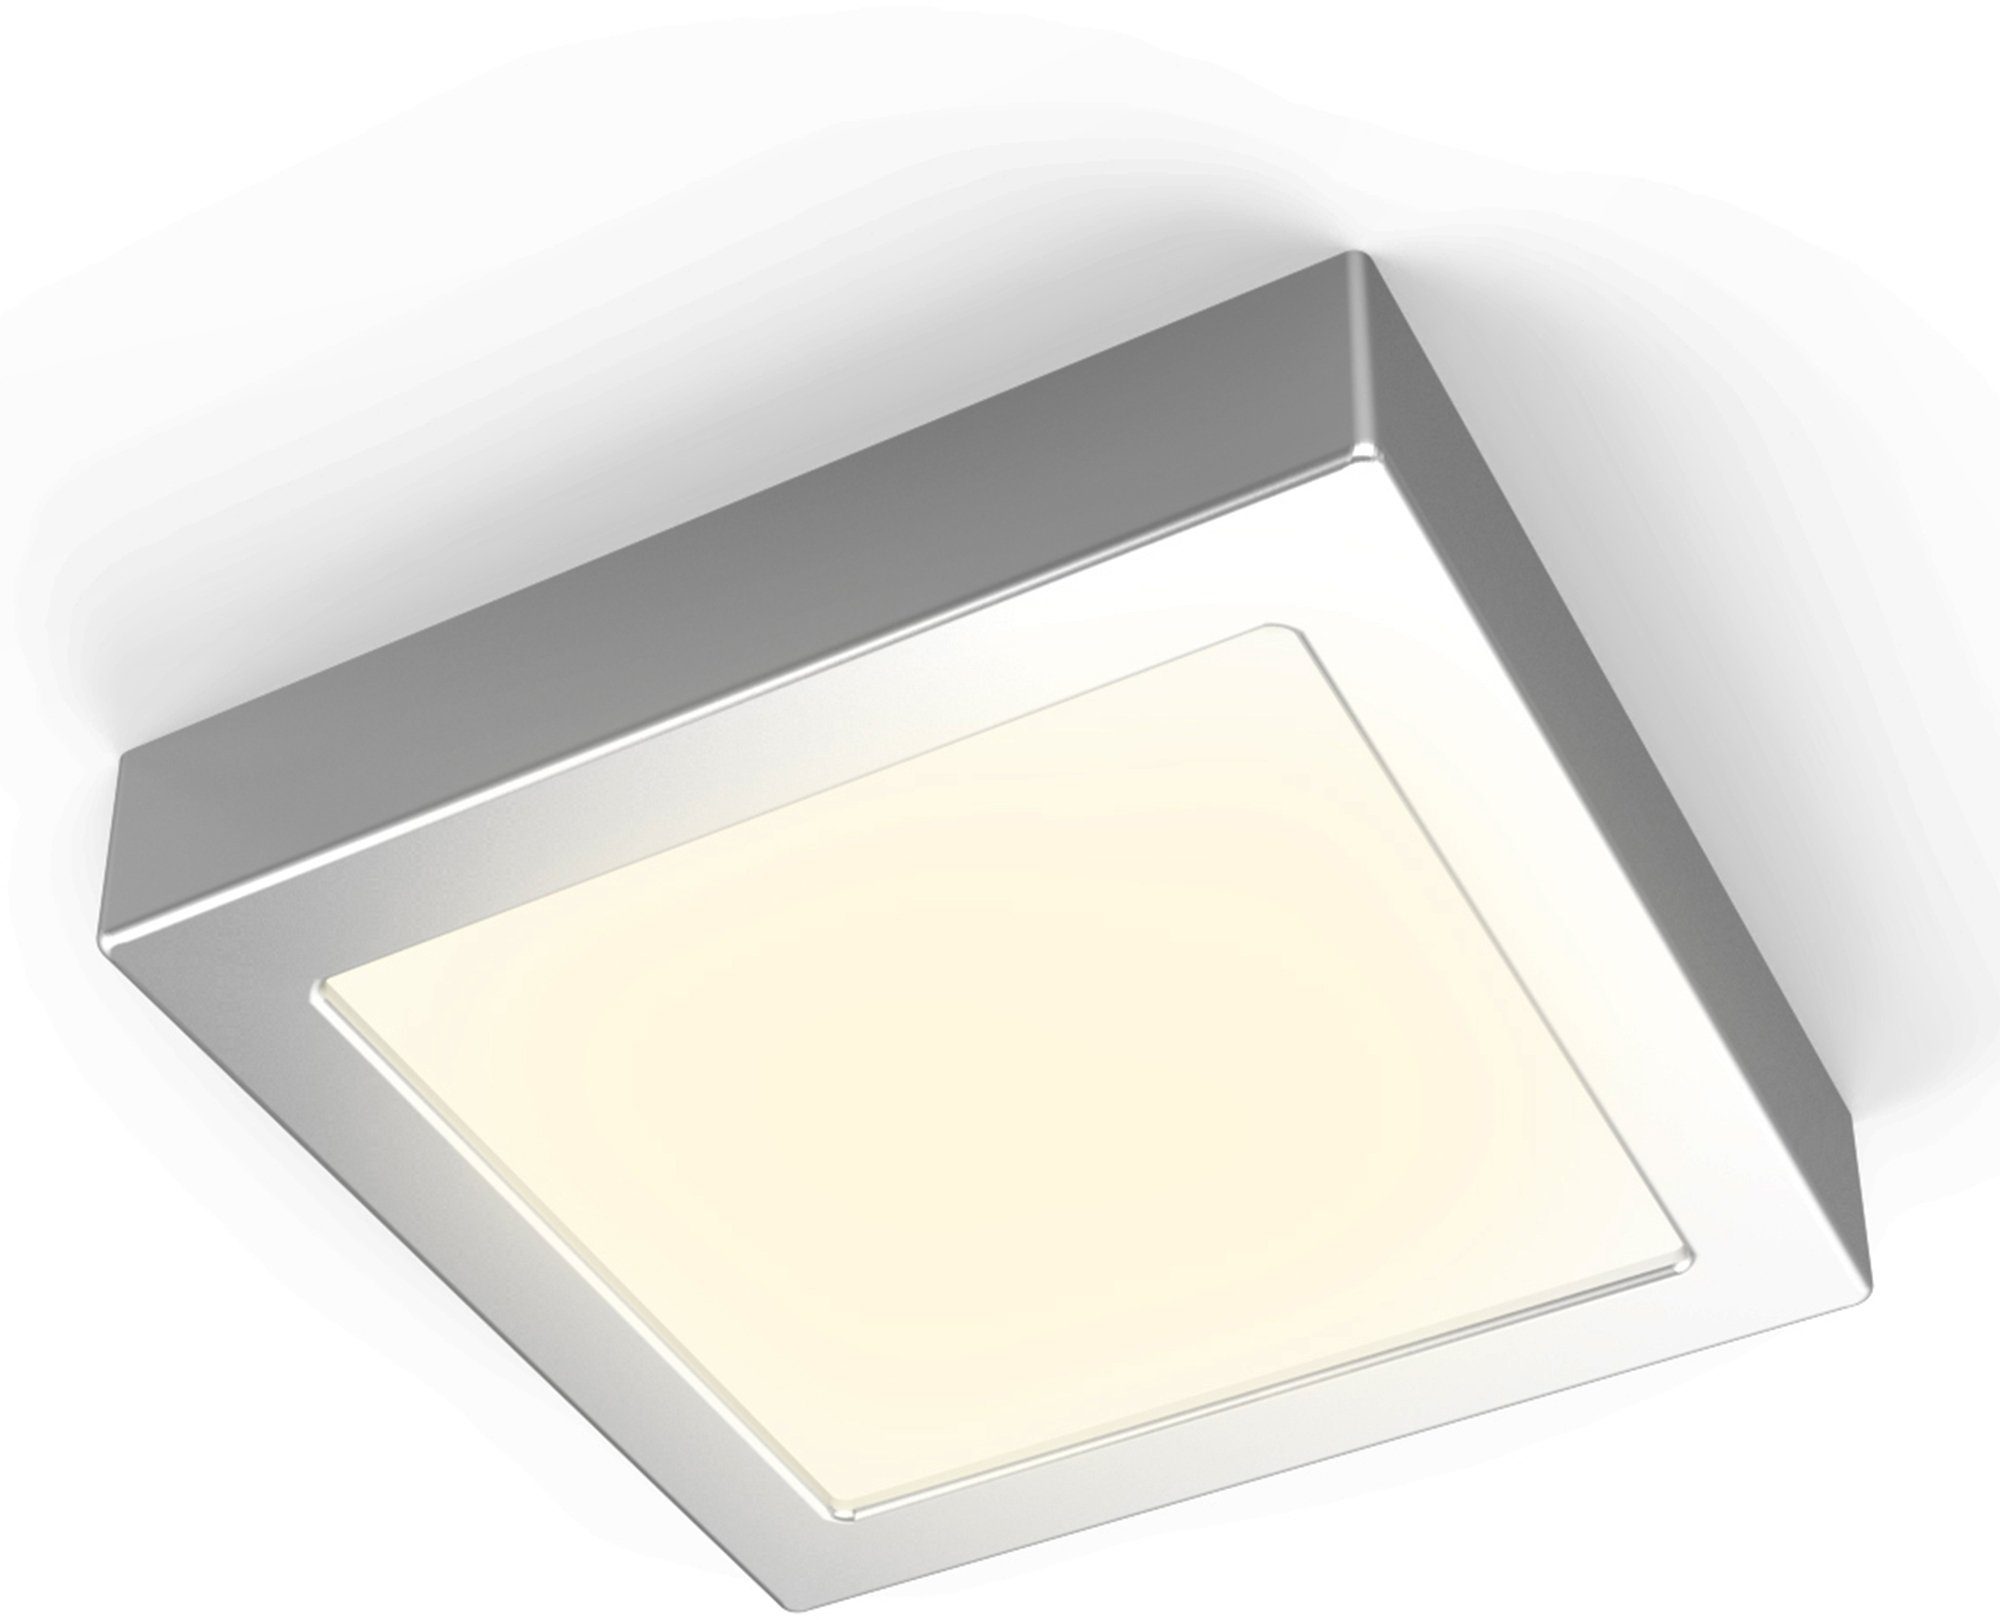 B.K.Licht LED Aufbaustrahler Panel Lampe LED integriert, Garnet, LED fest Aufputzspot 12W Warmweiß, Aufbauleuchte Unterbauleuchte